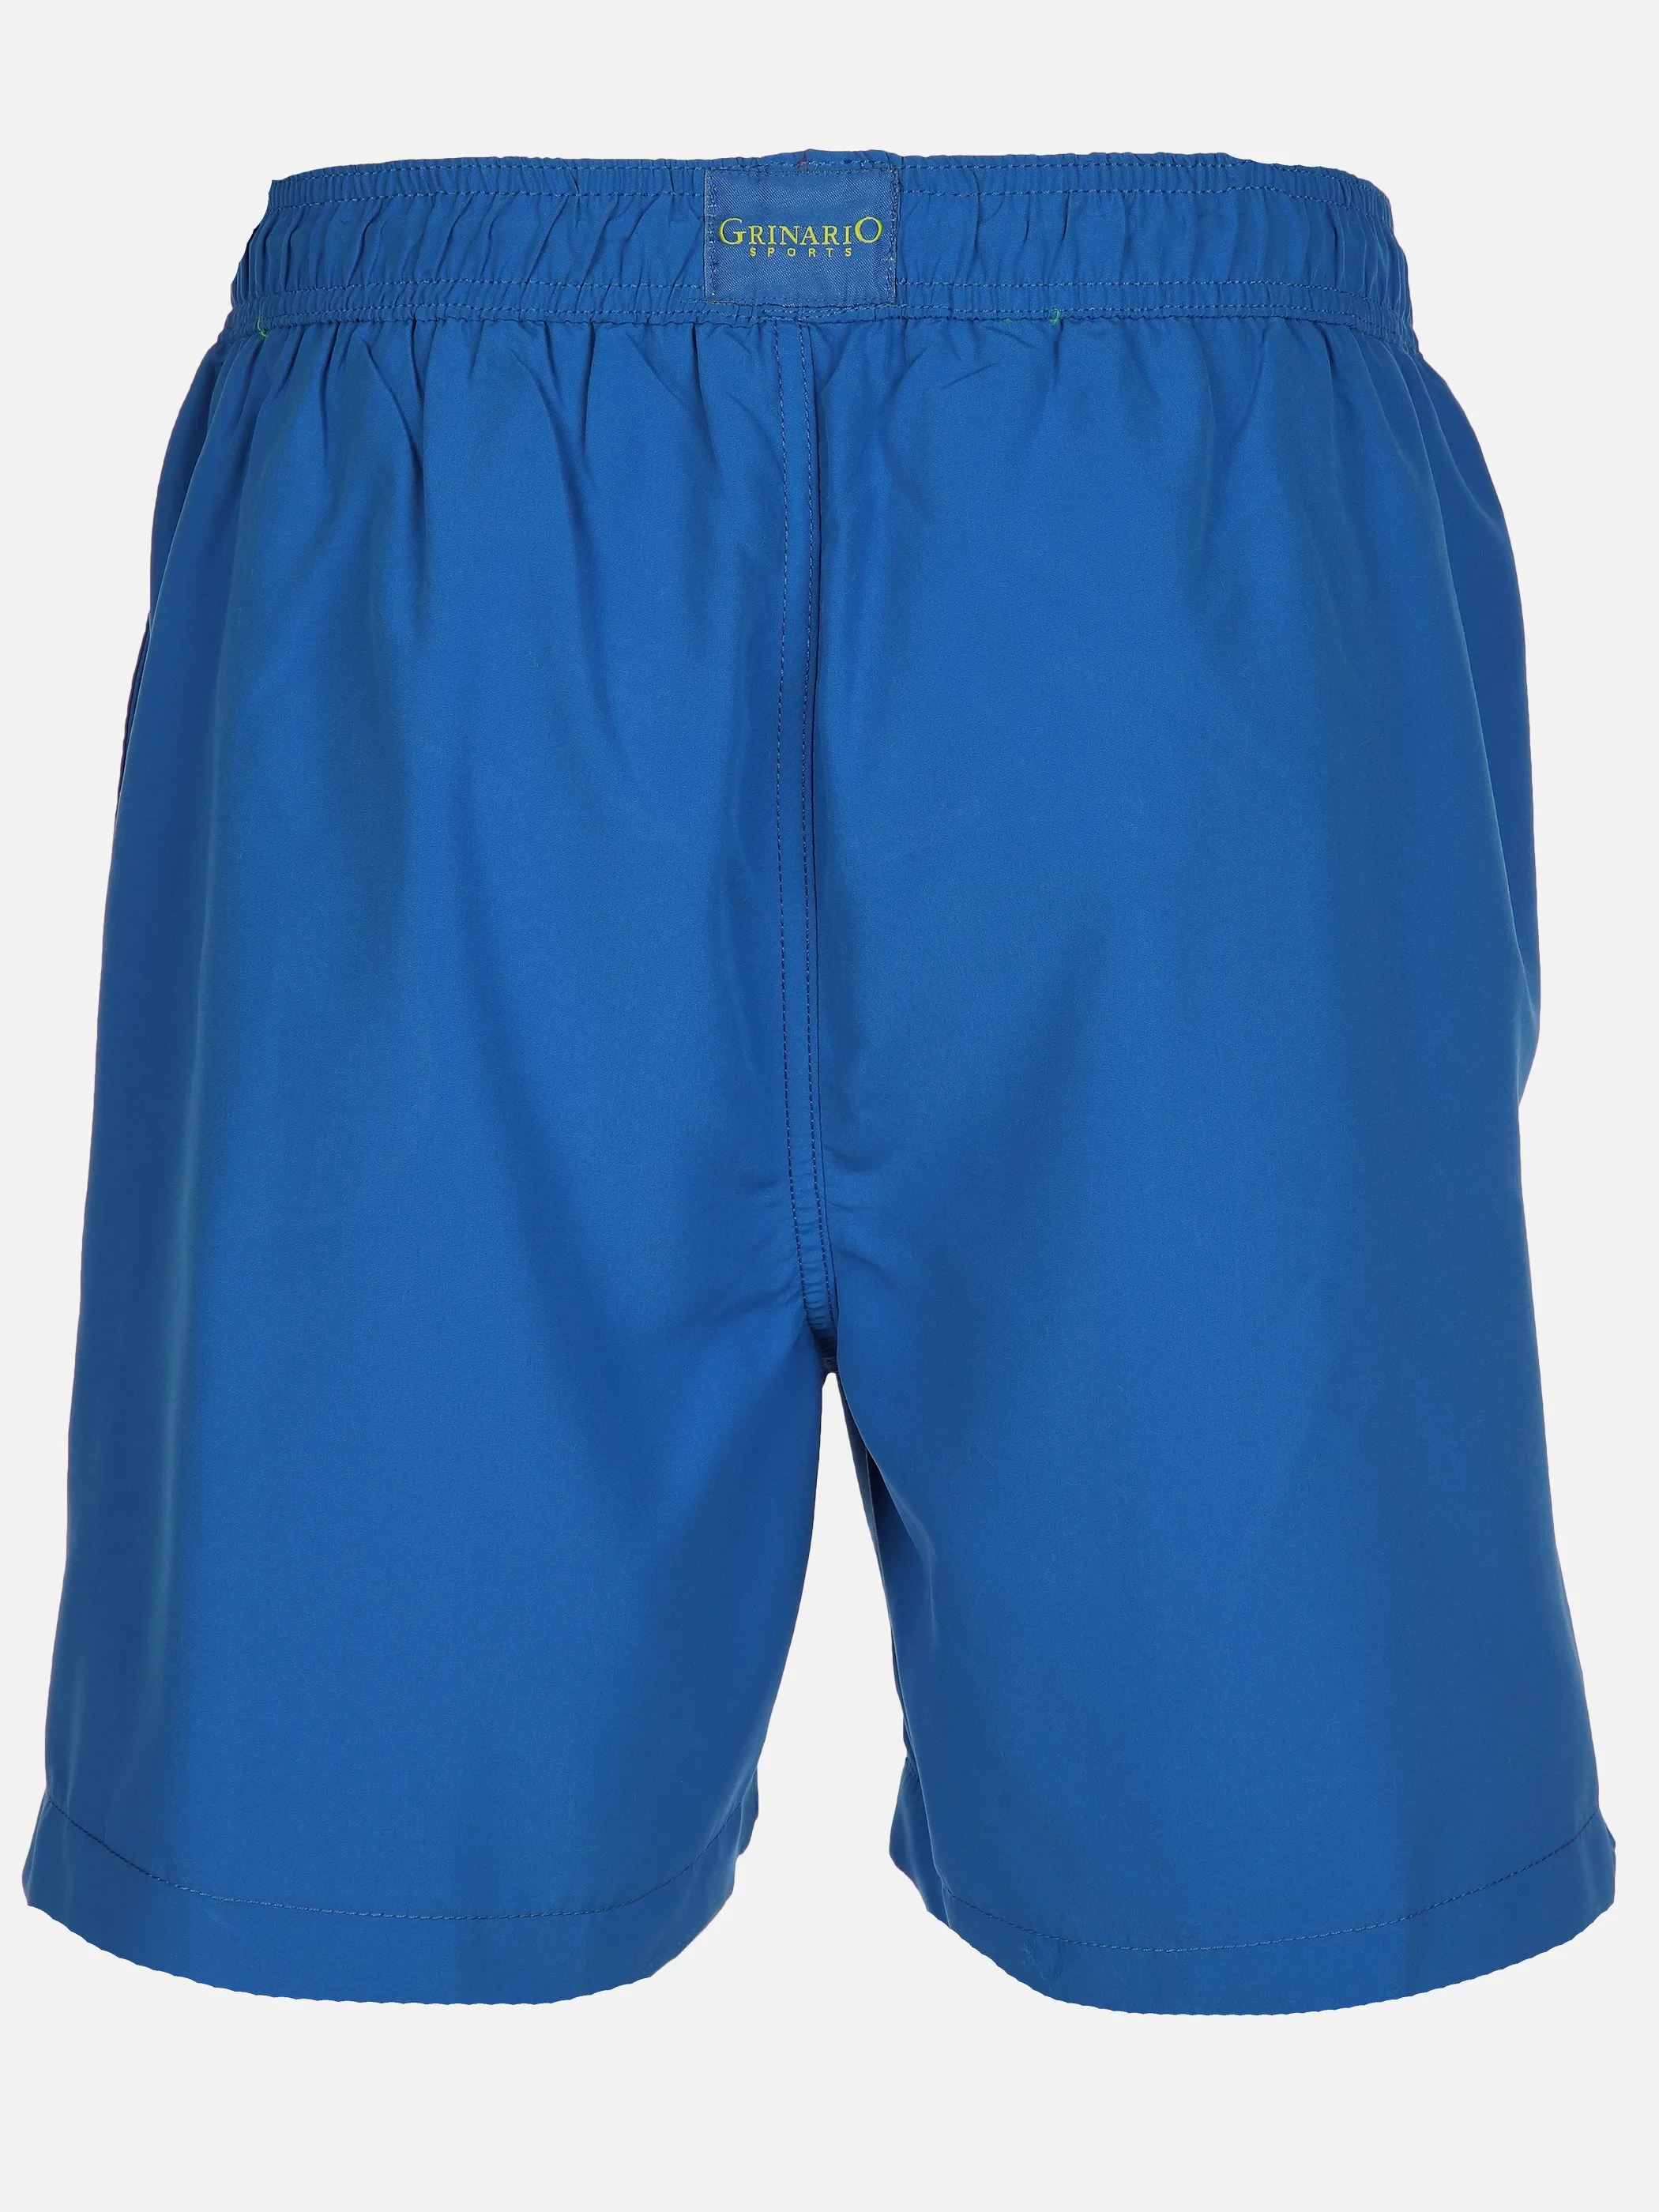 Grinario Sports He- Badehose uni, mit Kontrast Blau 890155 BLUE 2